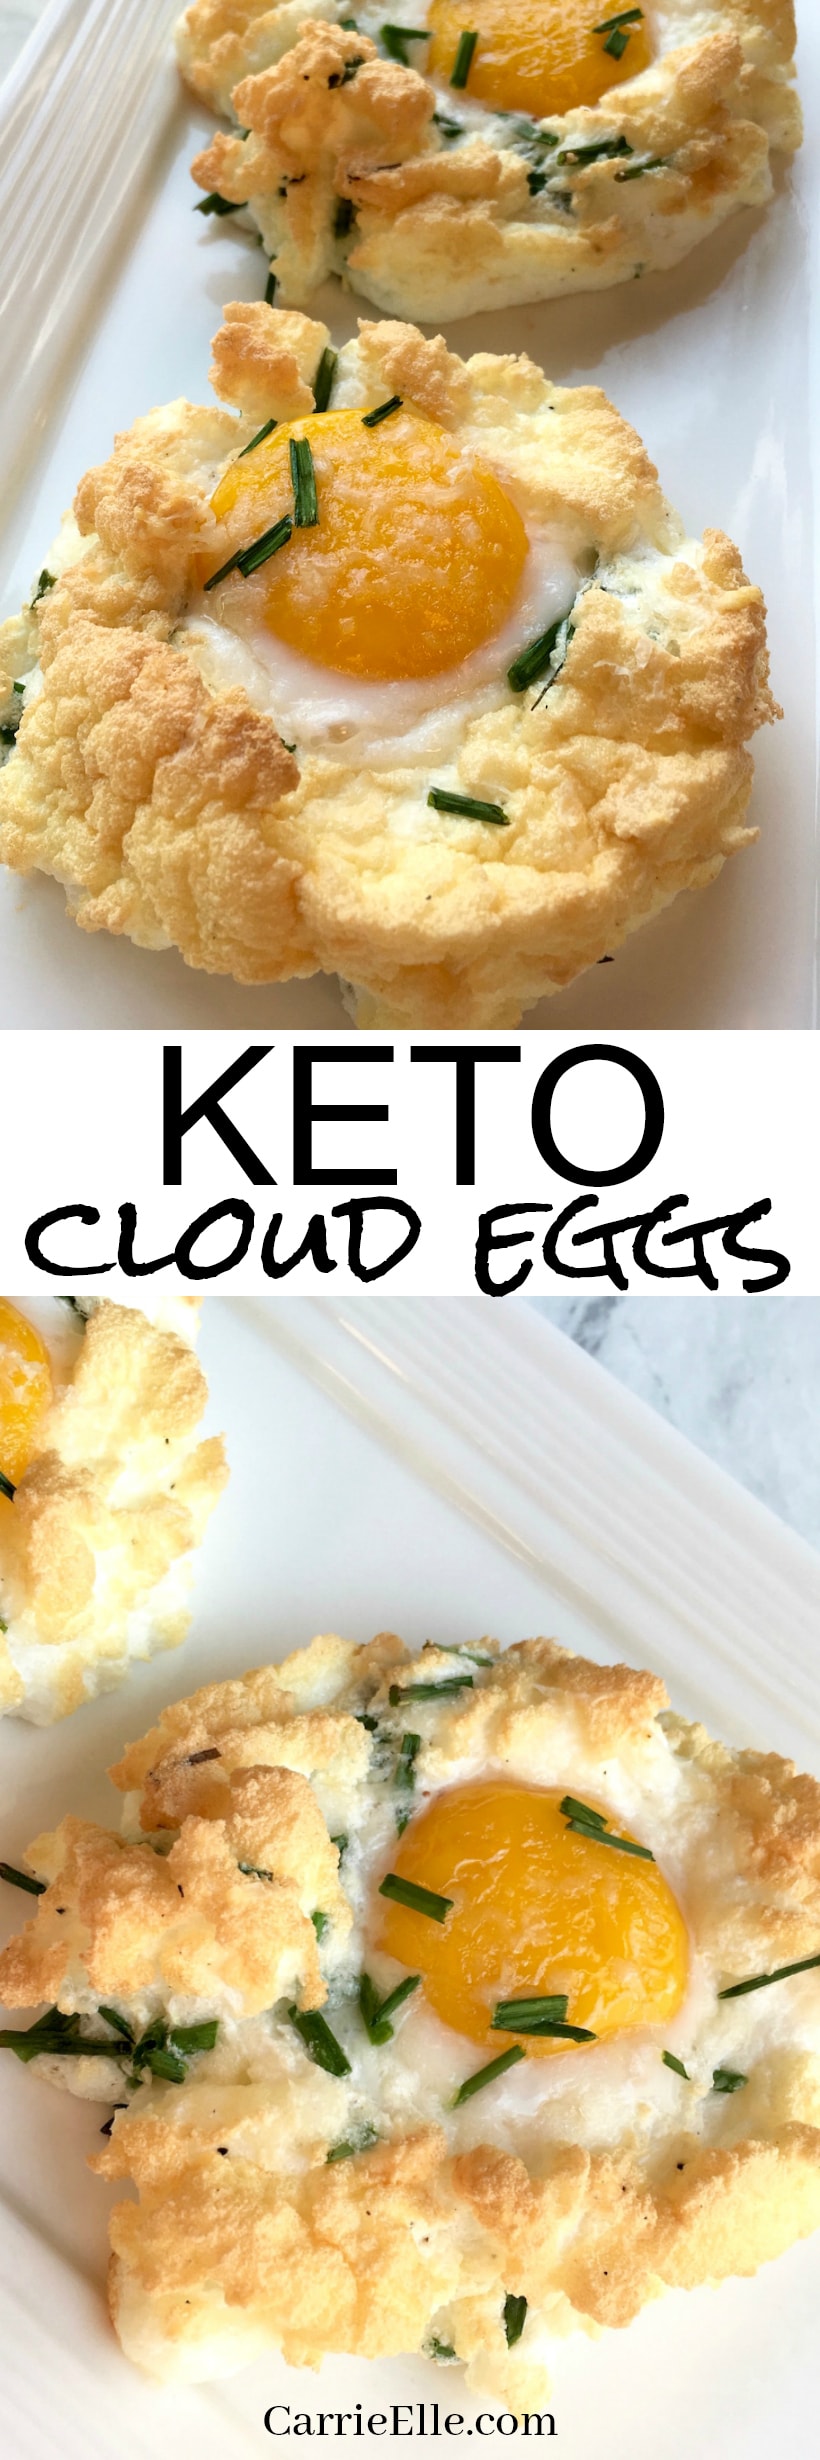 Keto Cloud Eggs